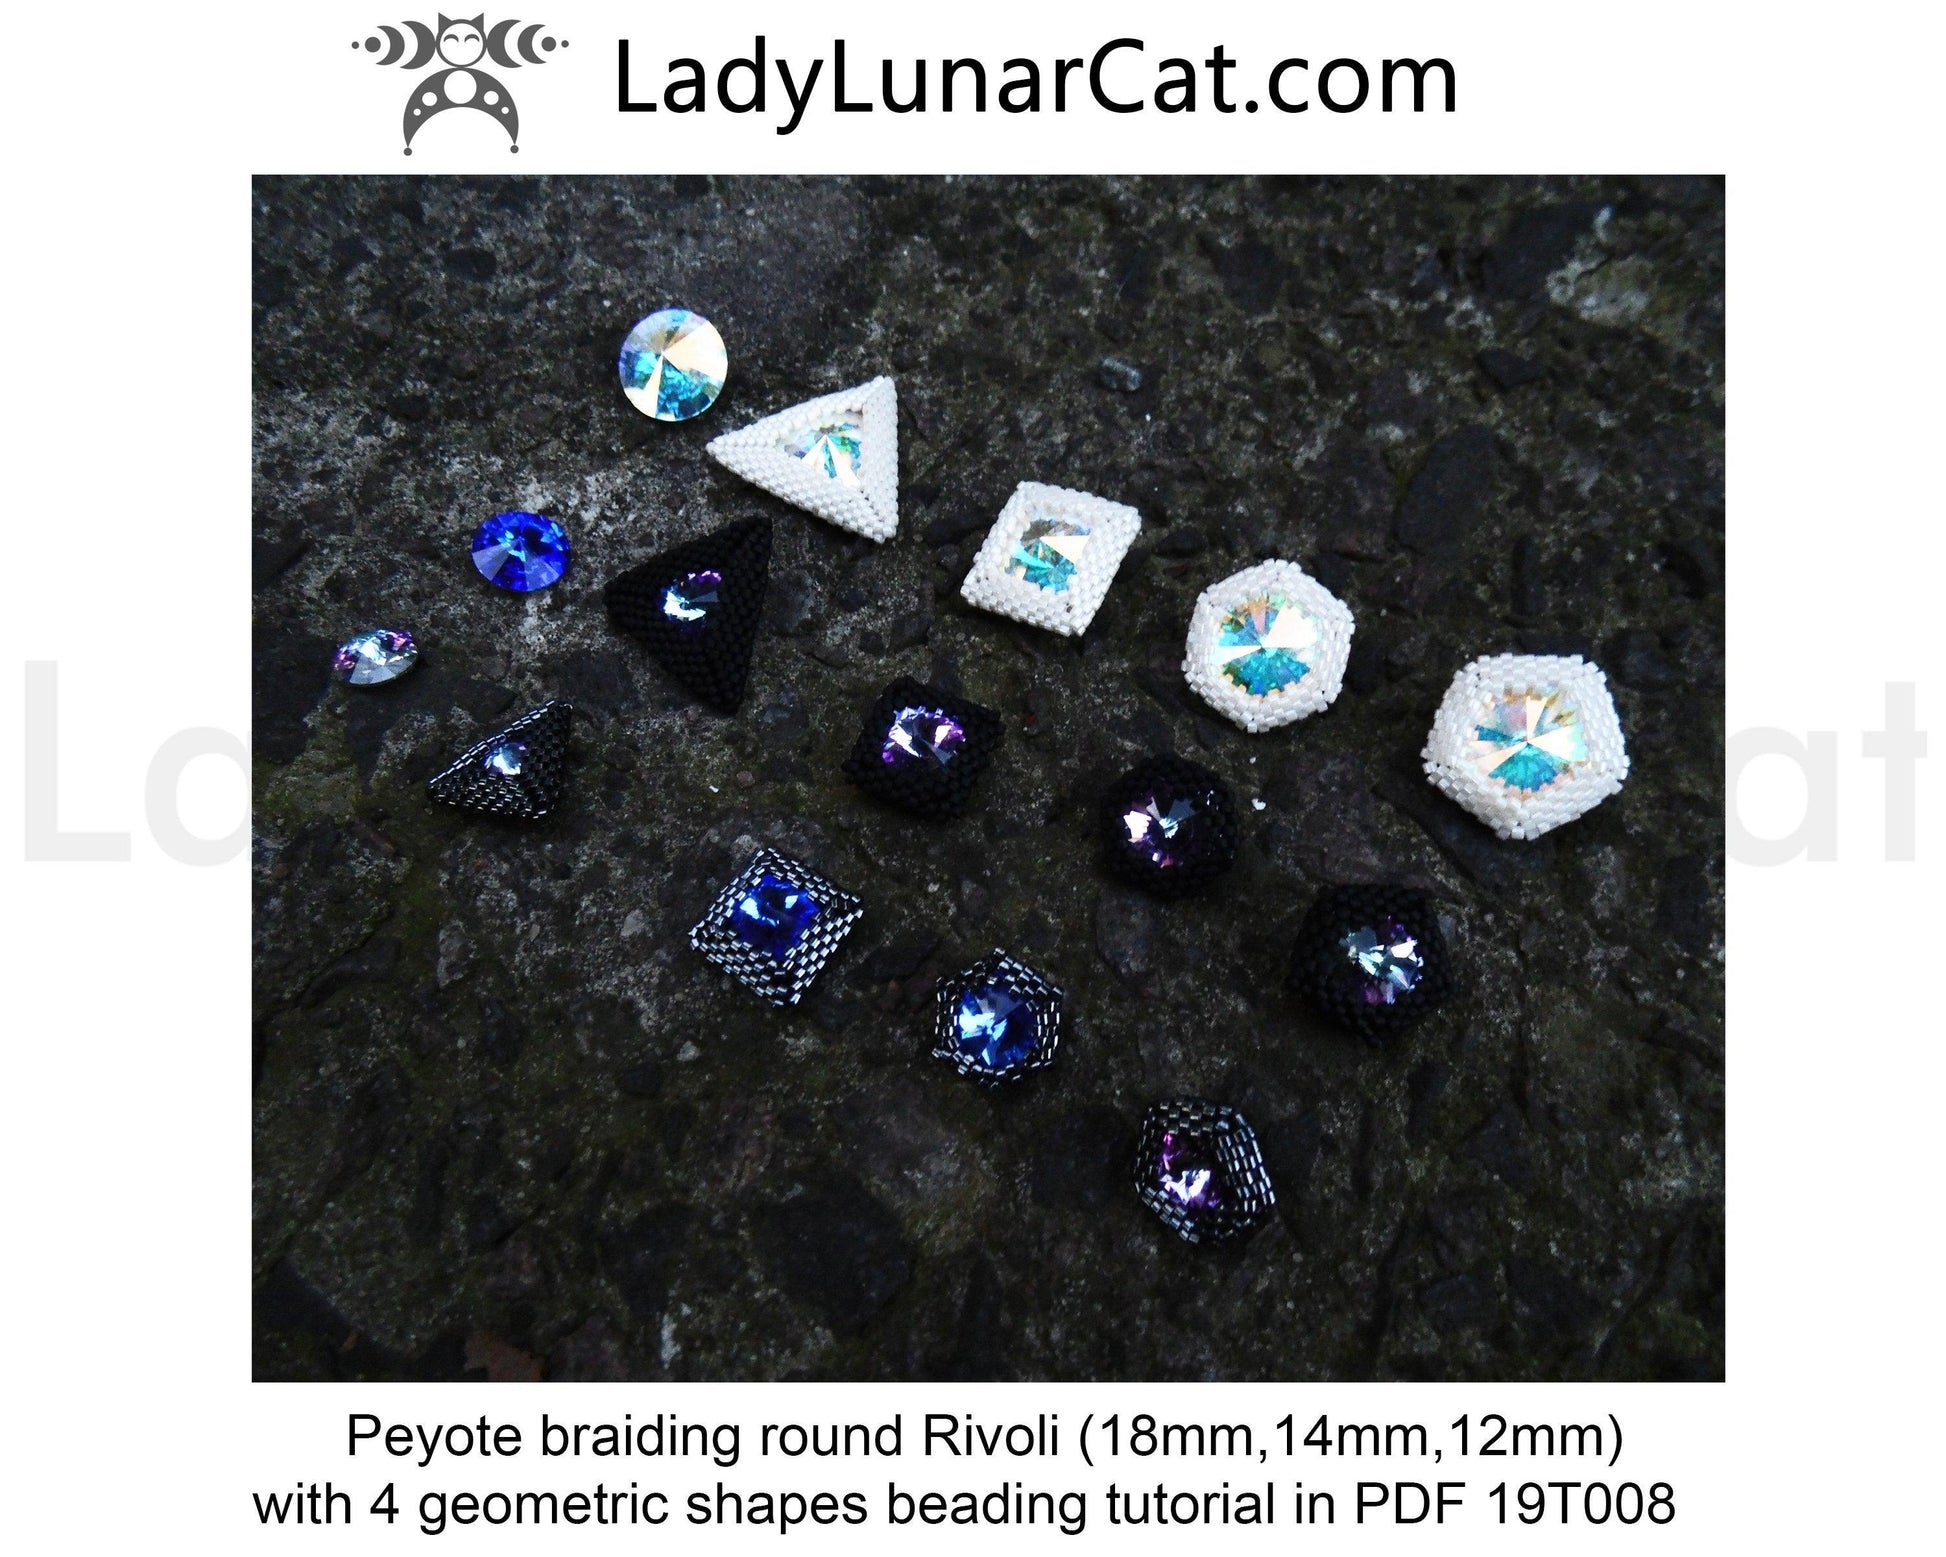 Beading tutorial for peyote geometric 3d forms with Rivoli braiding Step by step 19PT008 LadyLunarCat